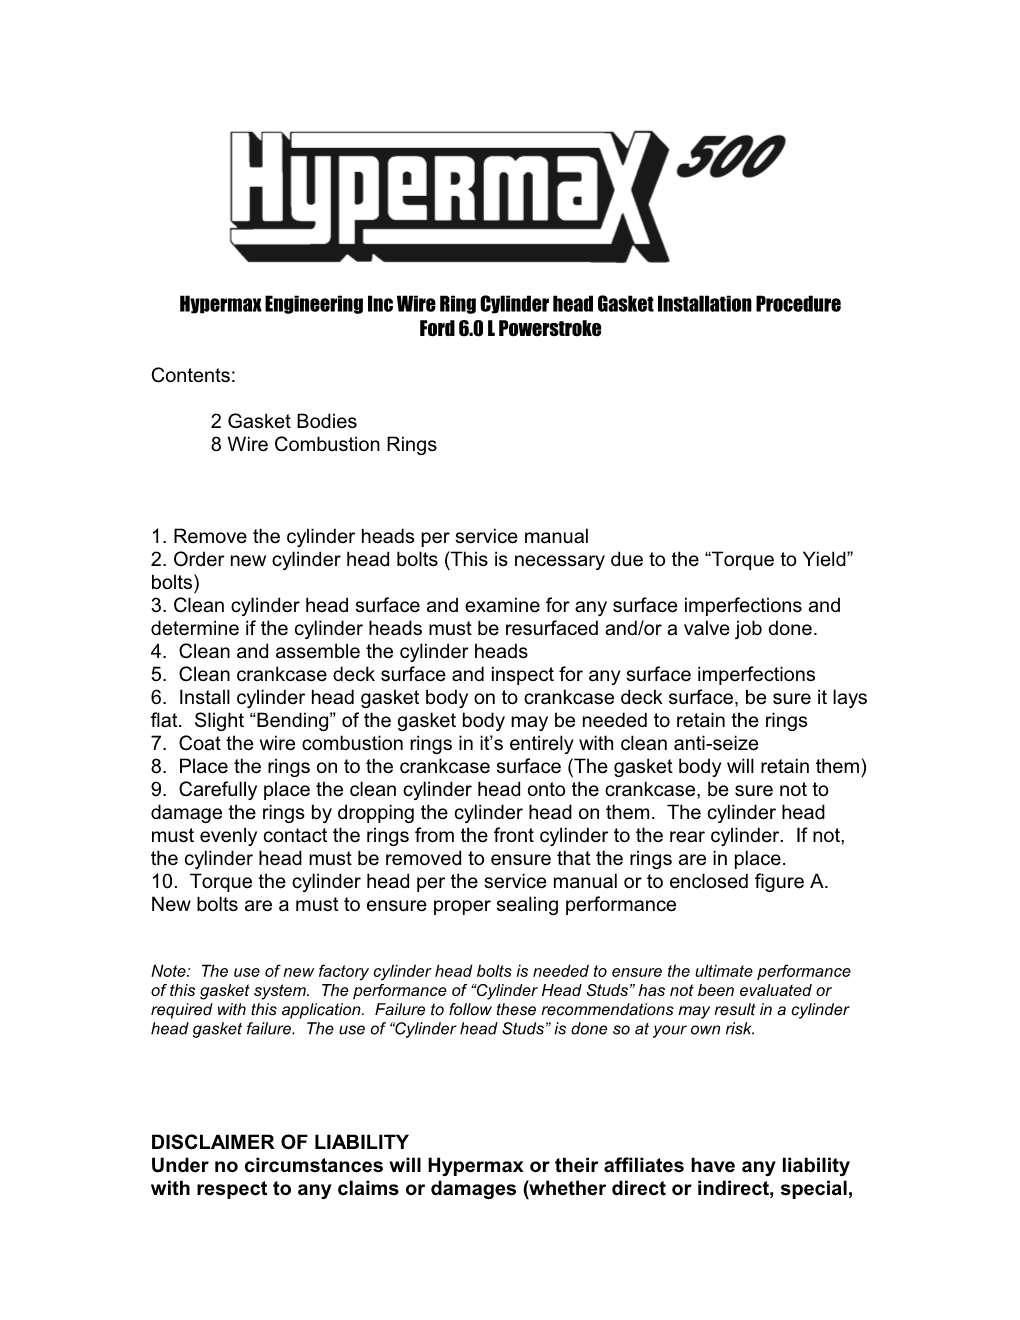 Hypermax Engineering Inc Wire Ring Cylinder Head Gasket Installation Procedure